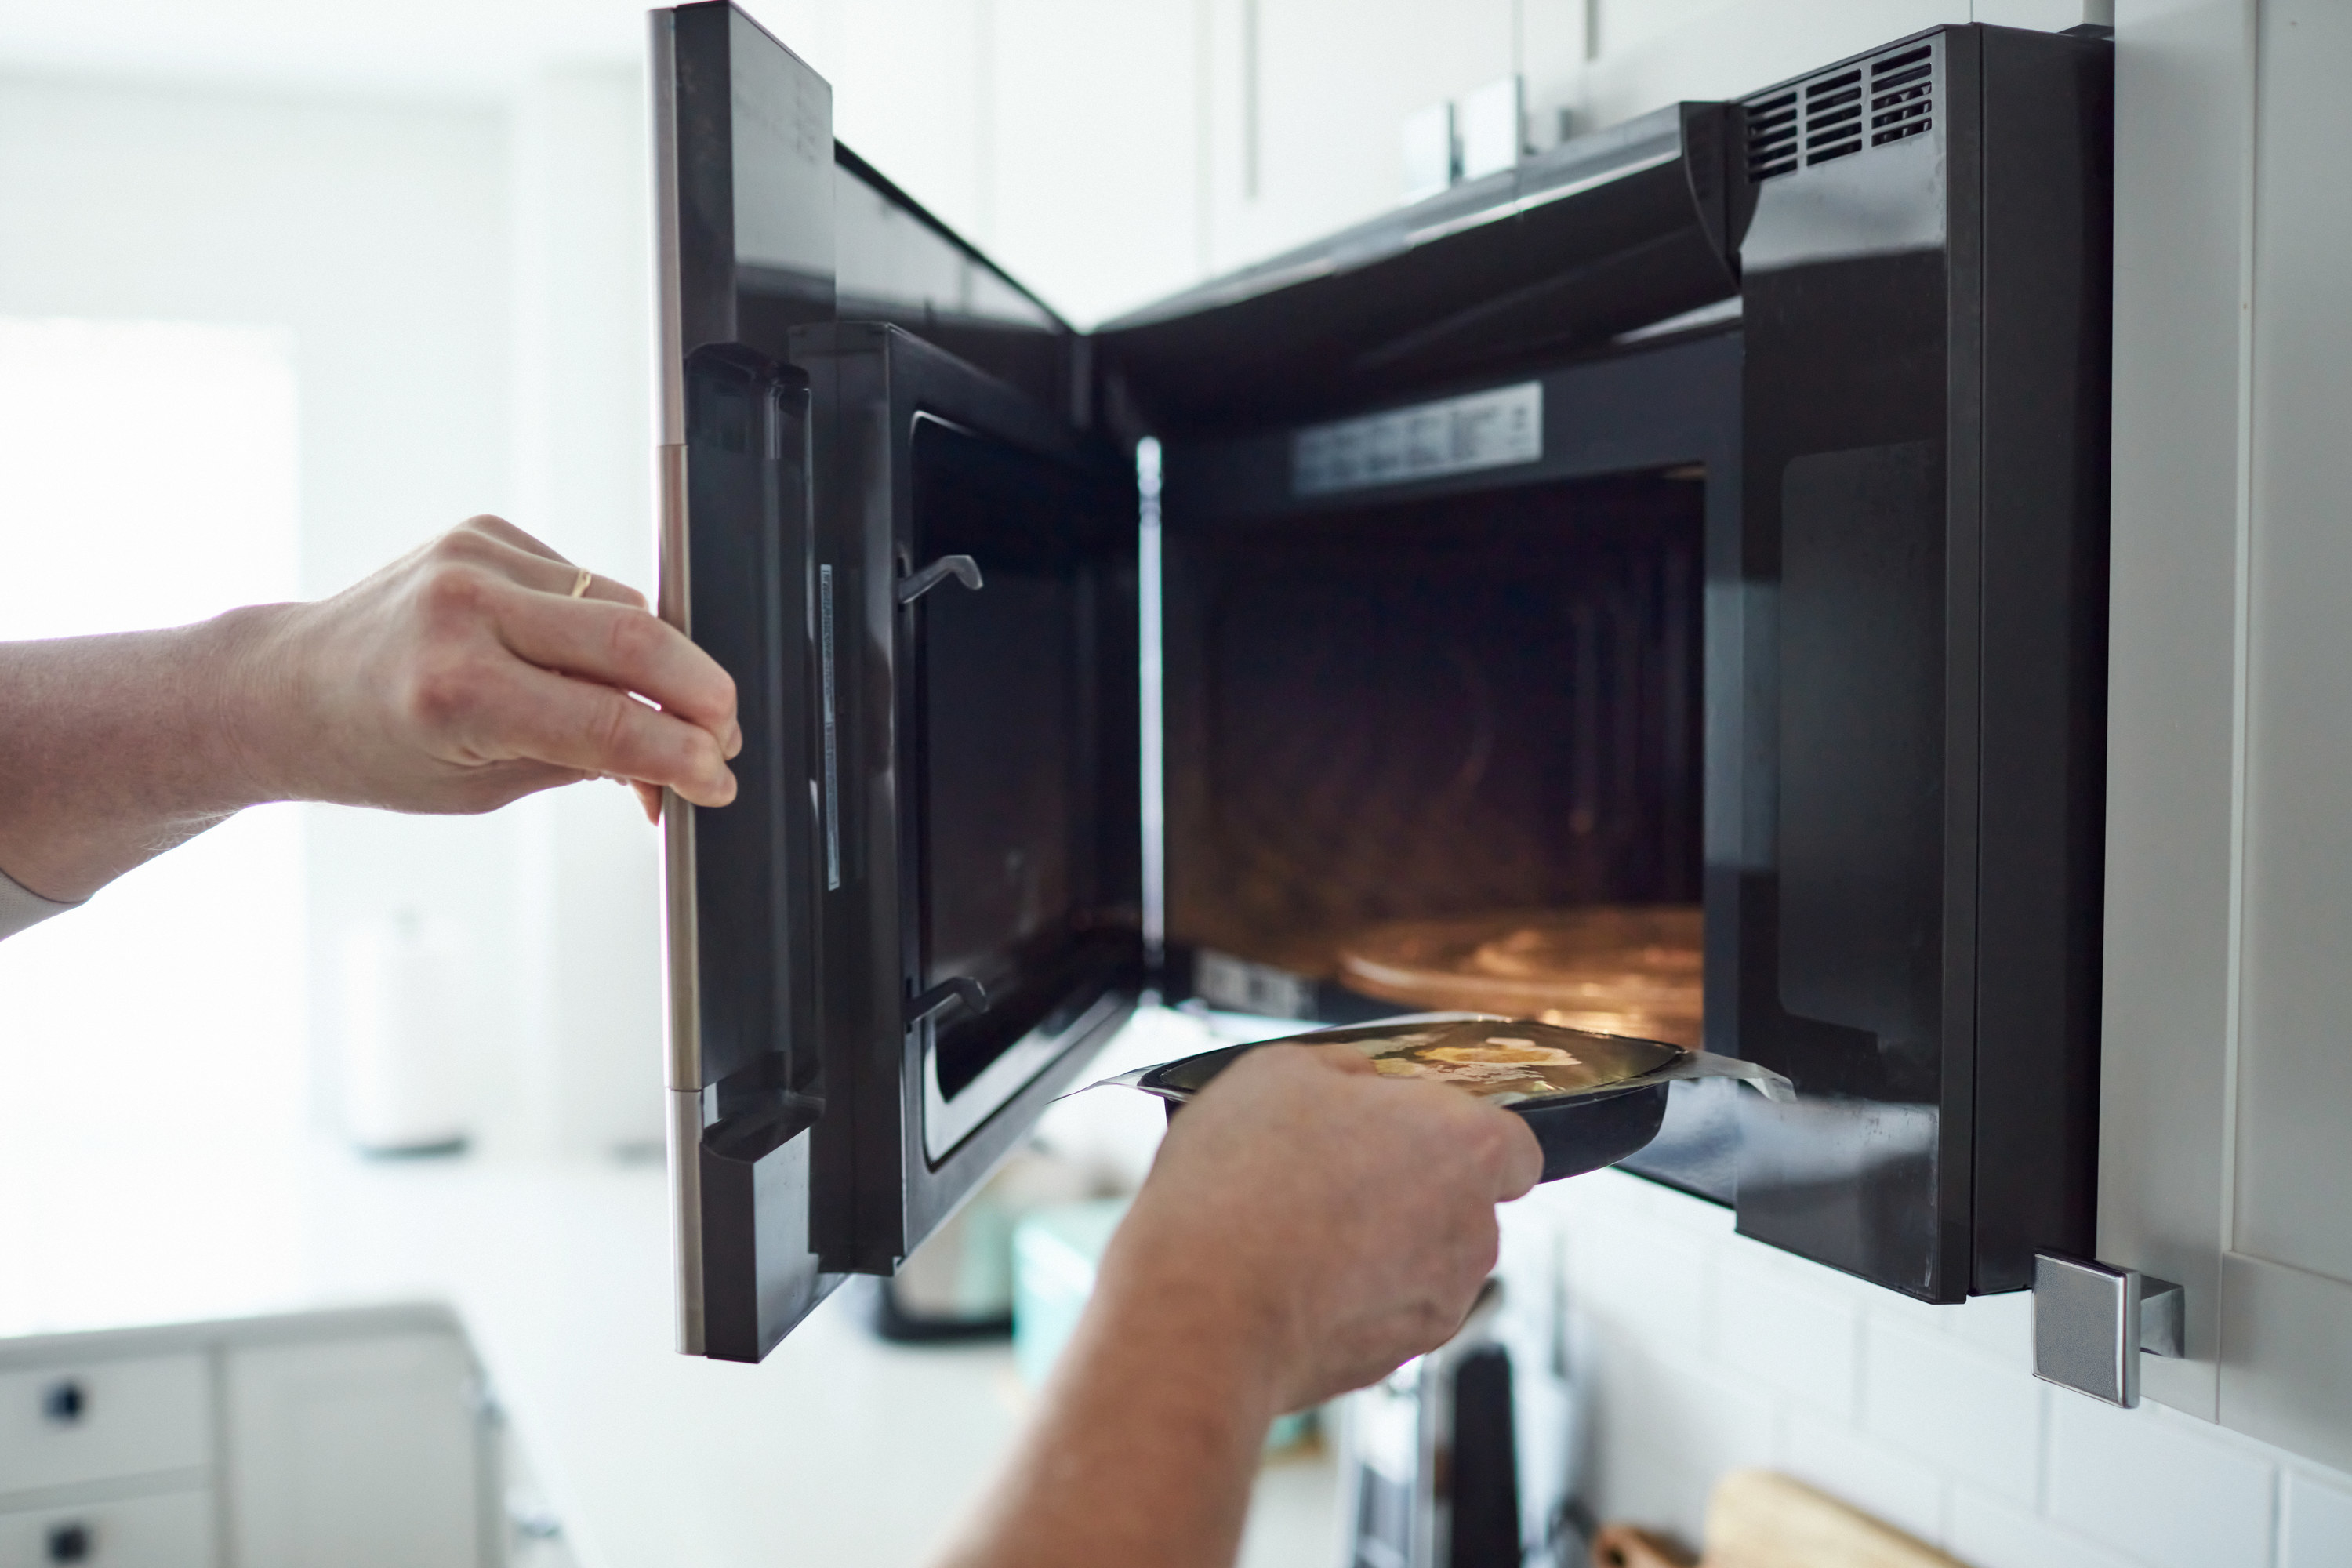 Putting food into a microwave-hood combo